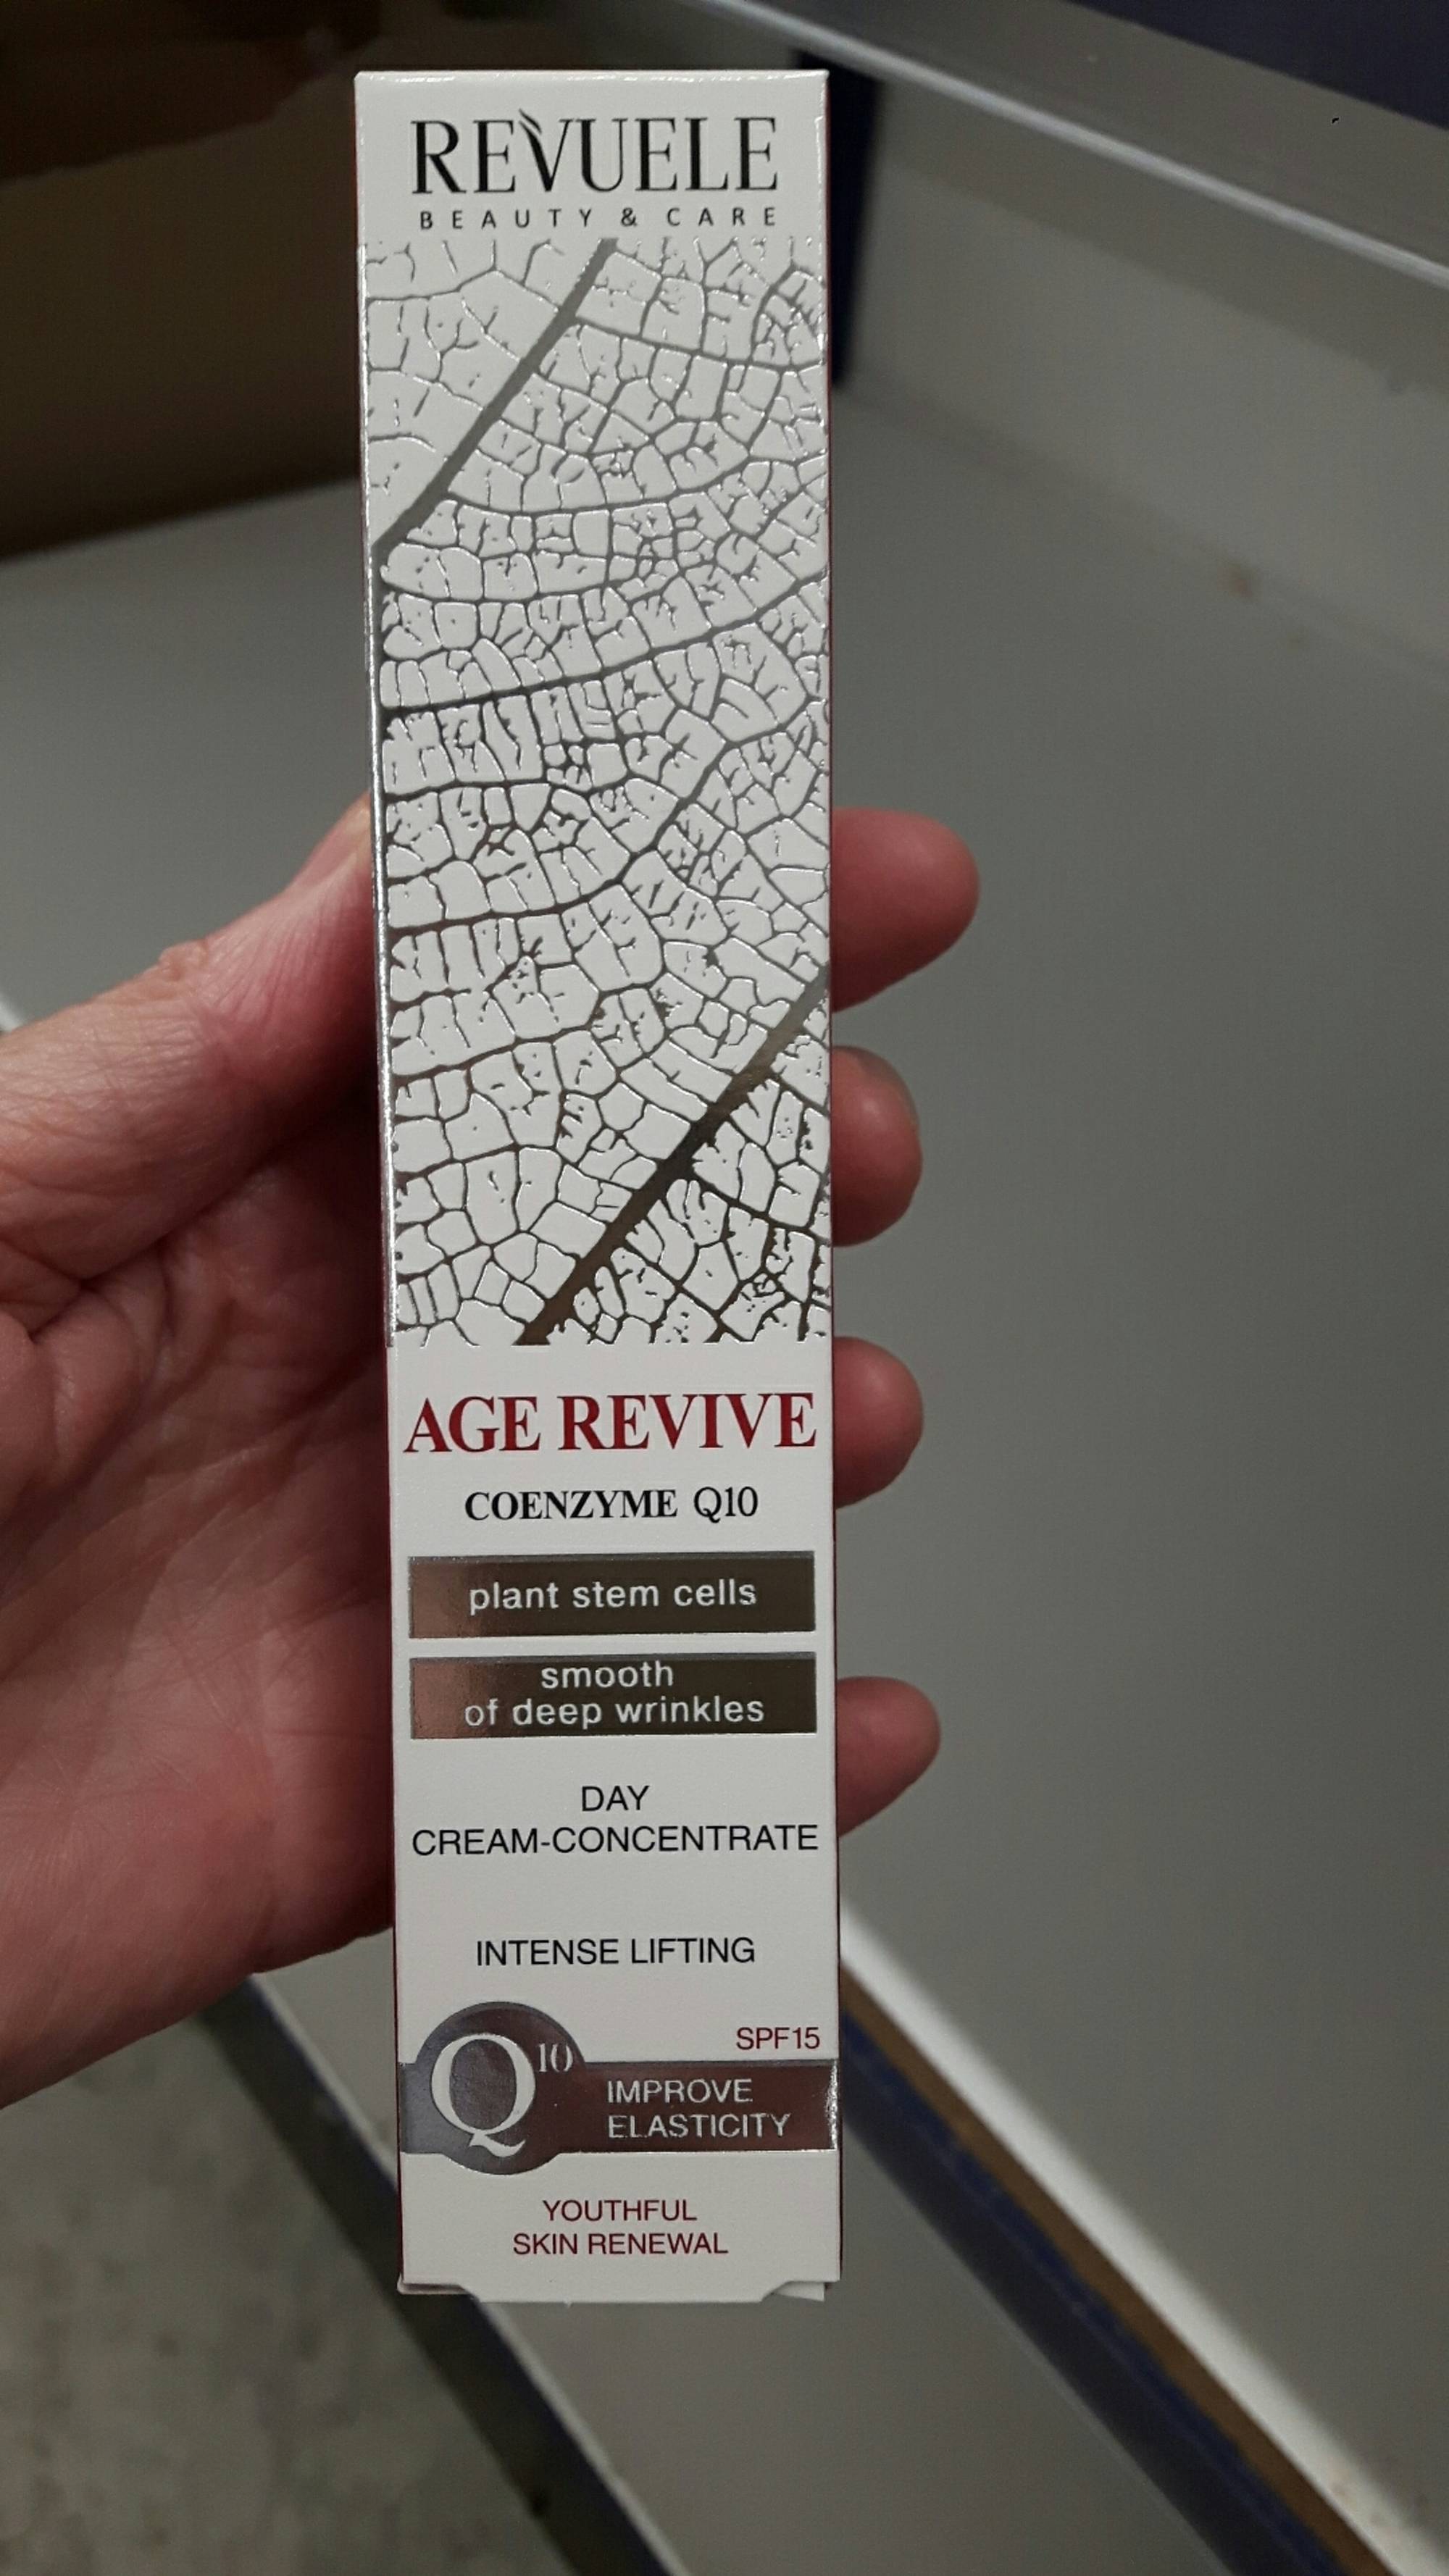 REVUELE - Age revive coenzyme Q10 - Day cream-concentrate SPF 15